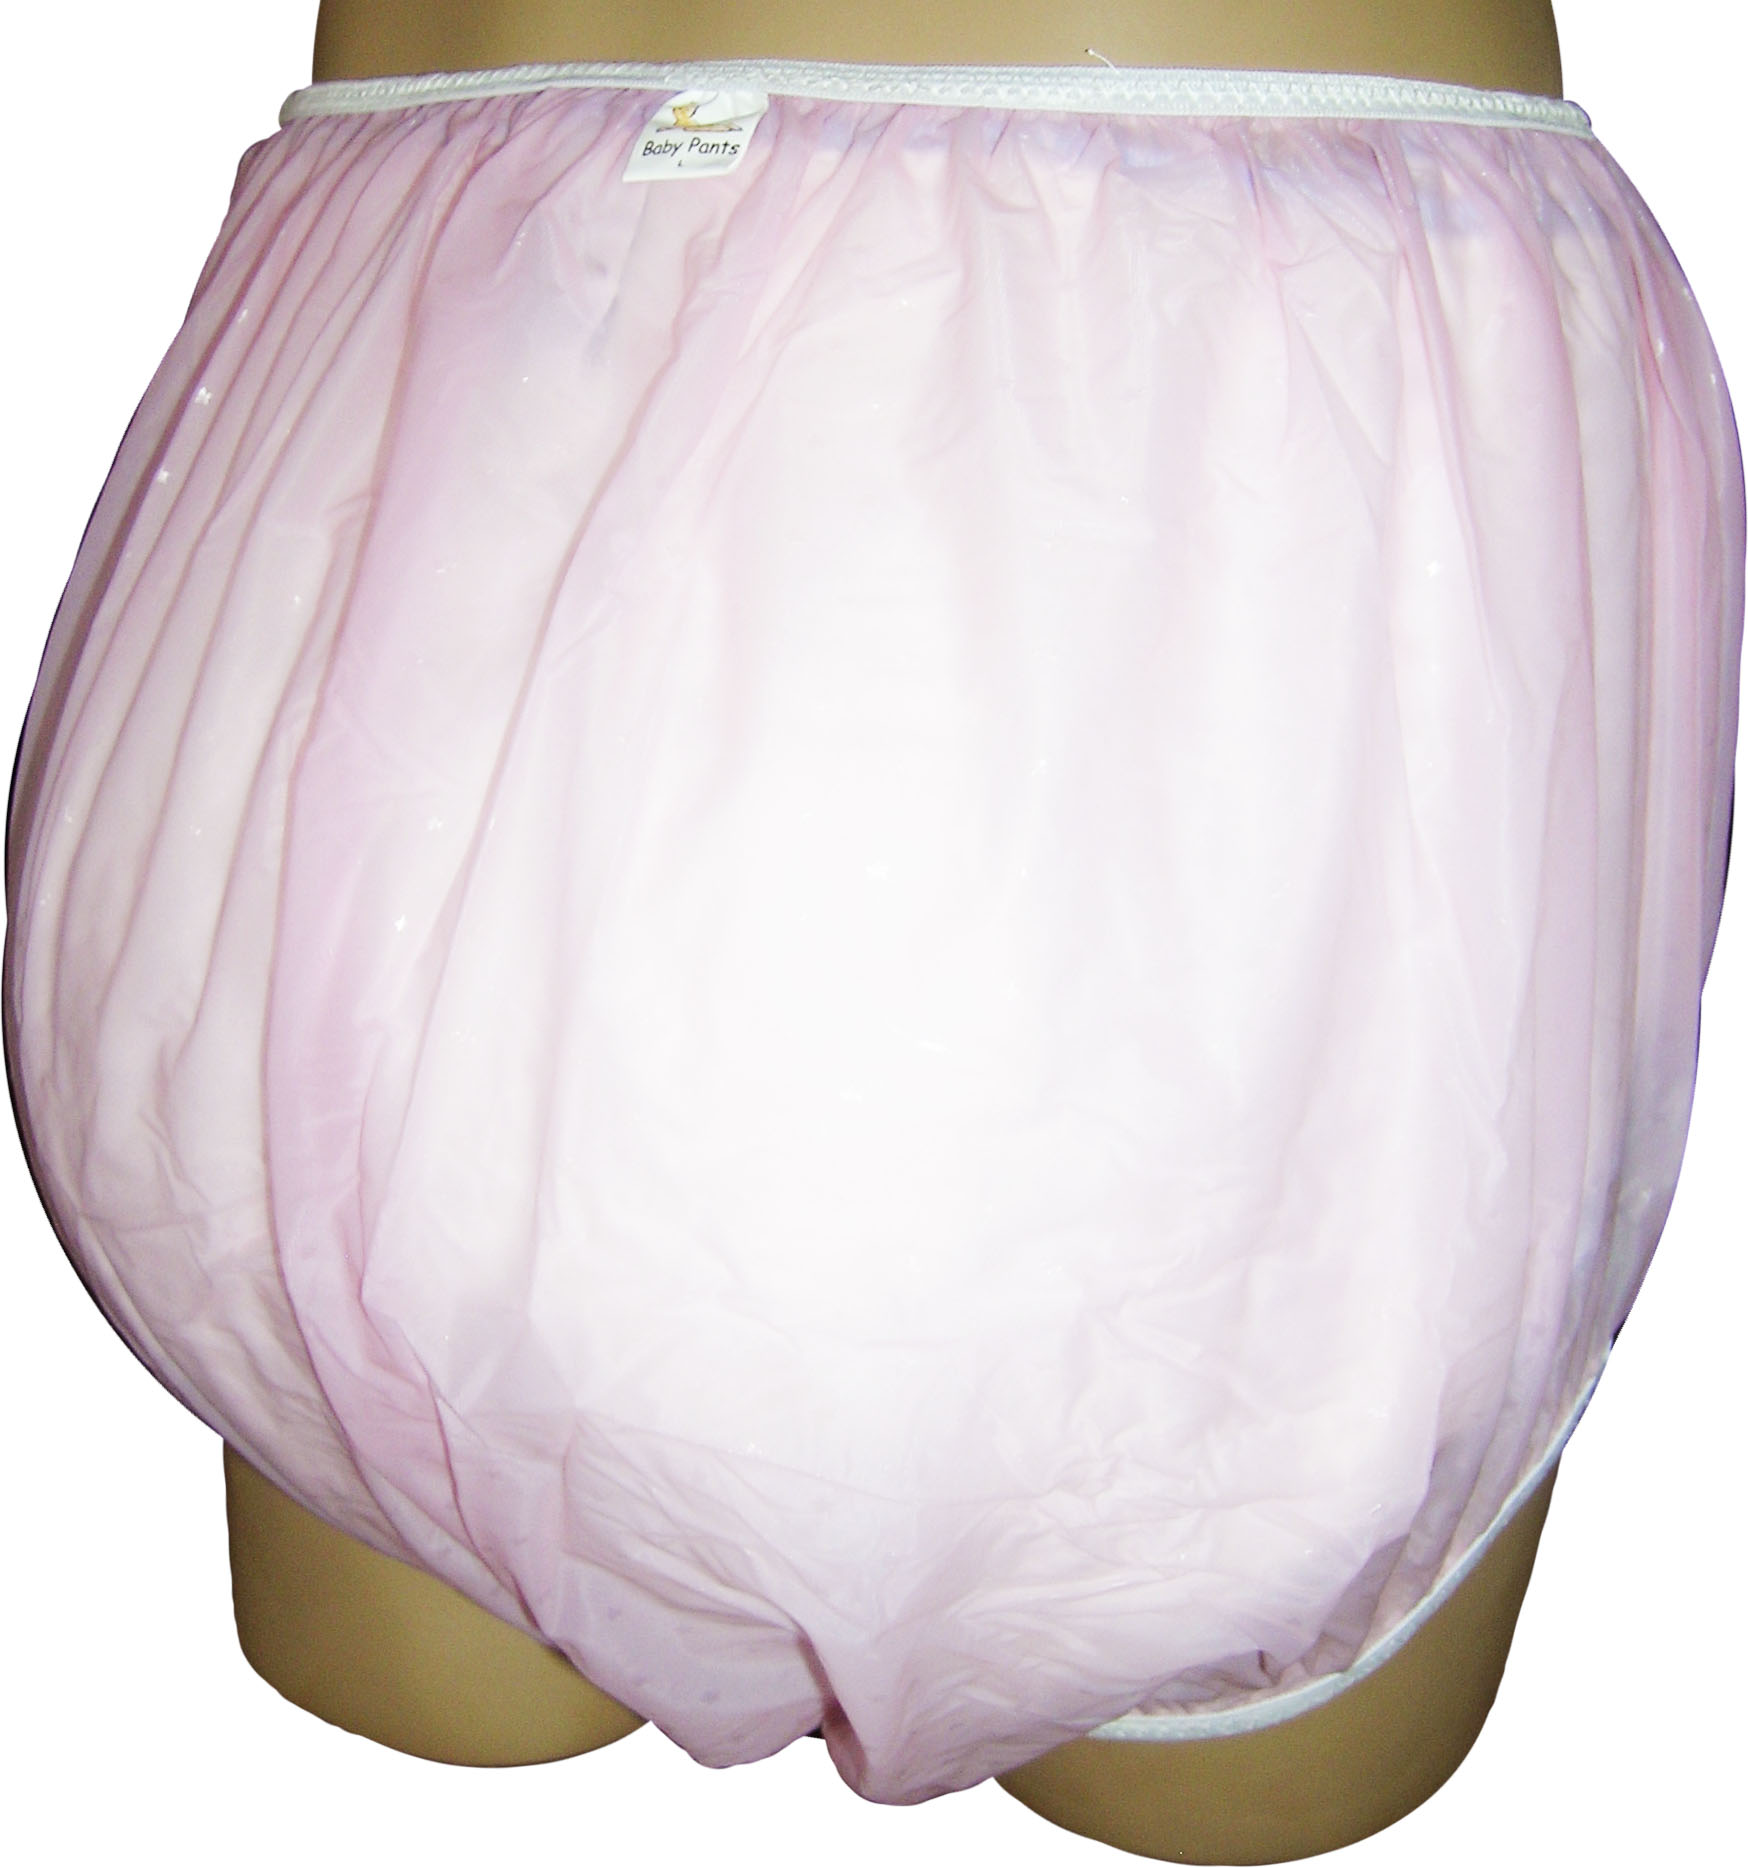  Bikini Cut Pull-On Style Adult Plastic Pants by